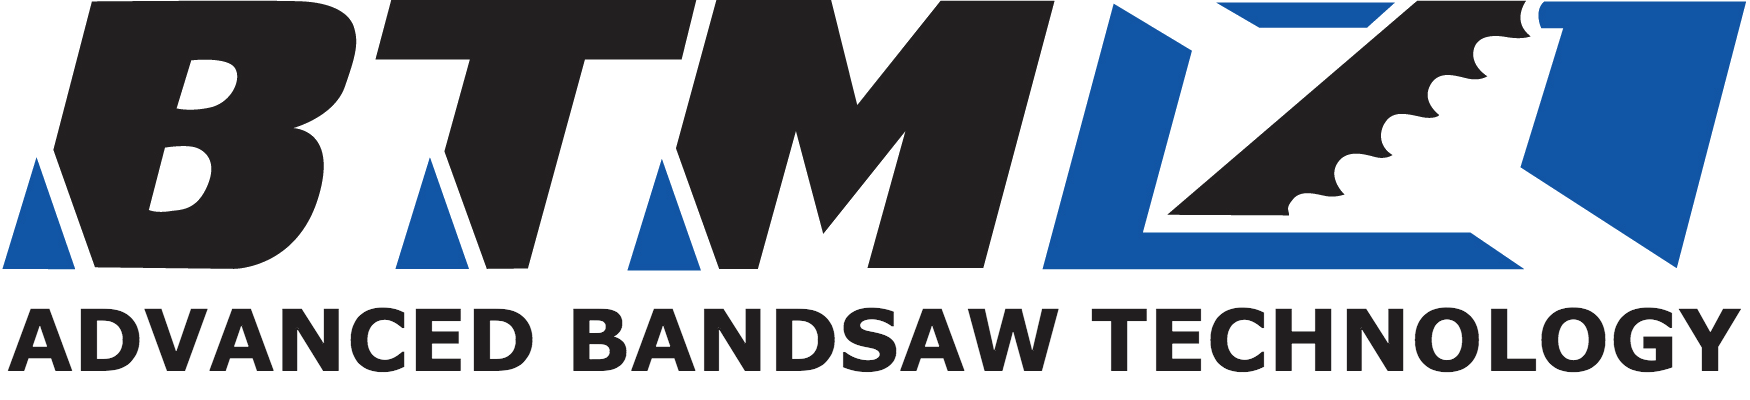 Btm Logo - BTM Saws